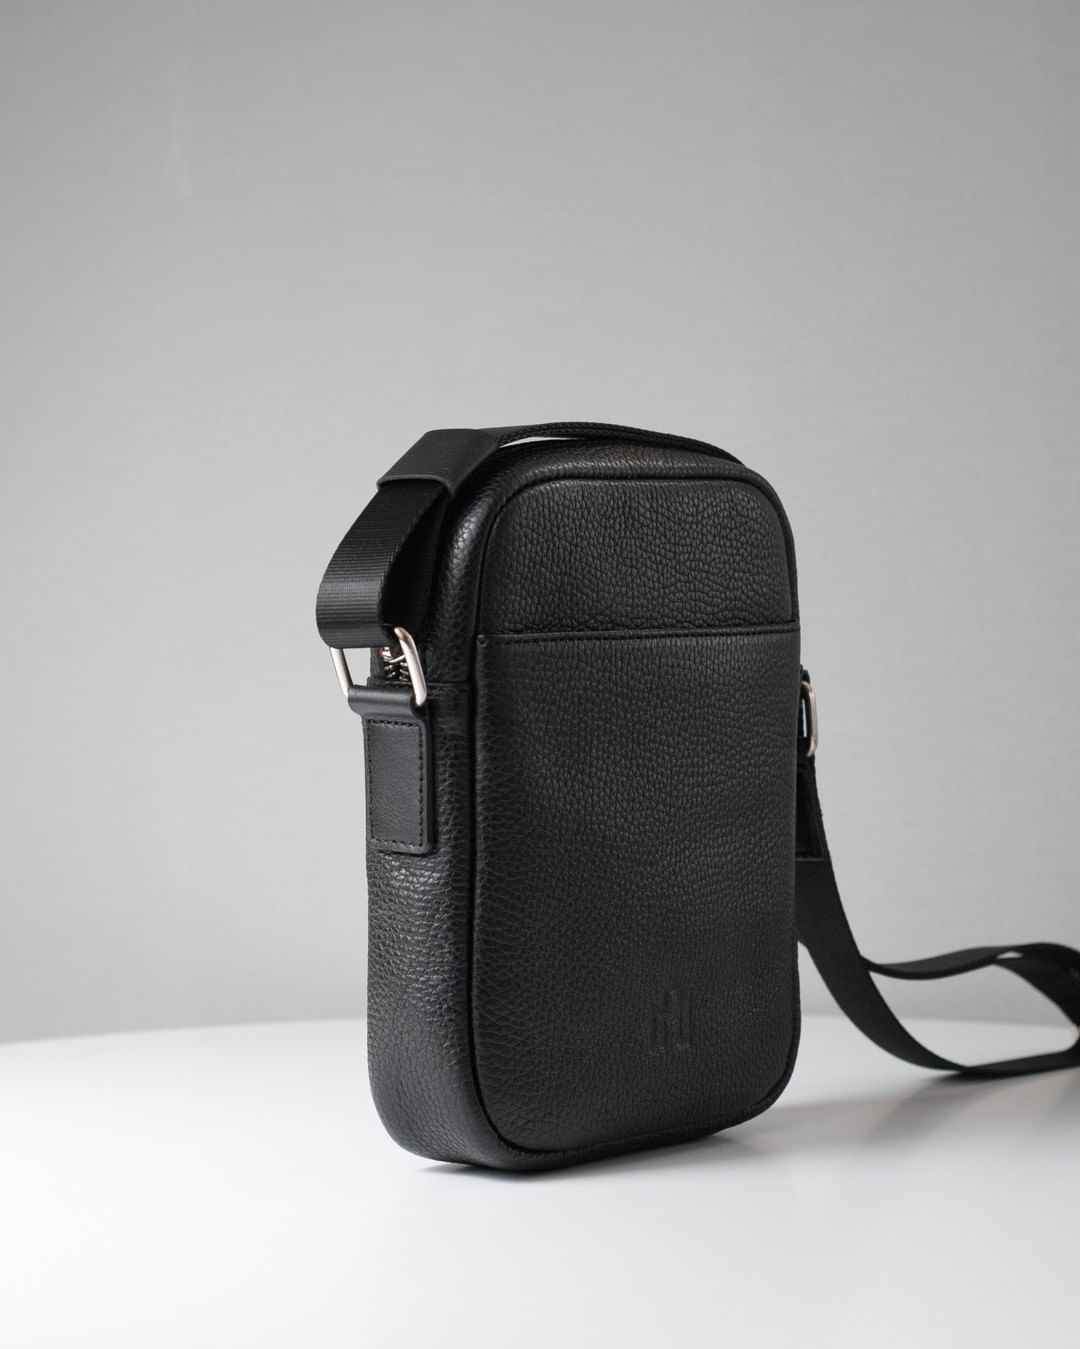 Amazon.com: MNODWLOF Small Crossbody Bag for Men Leather Shoulder Messenger  Bags Man Purse Travel Handbag for iPad 7.9